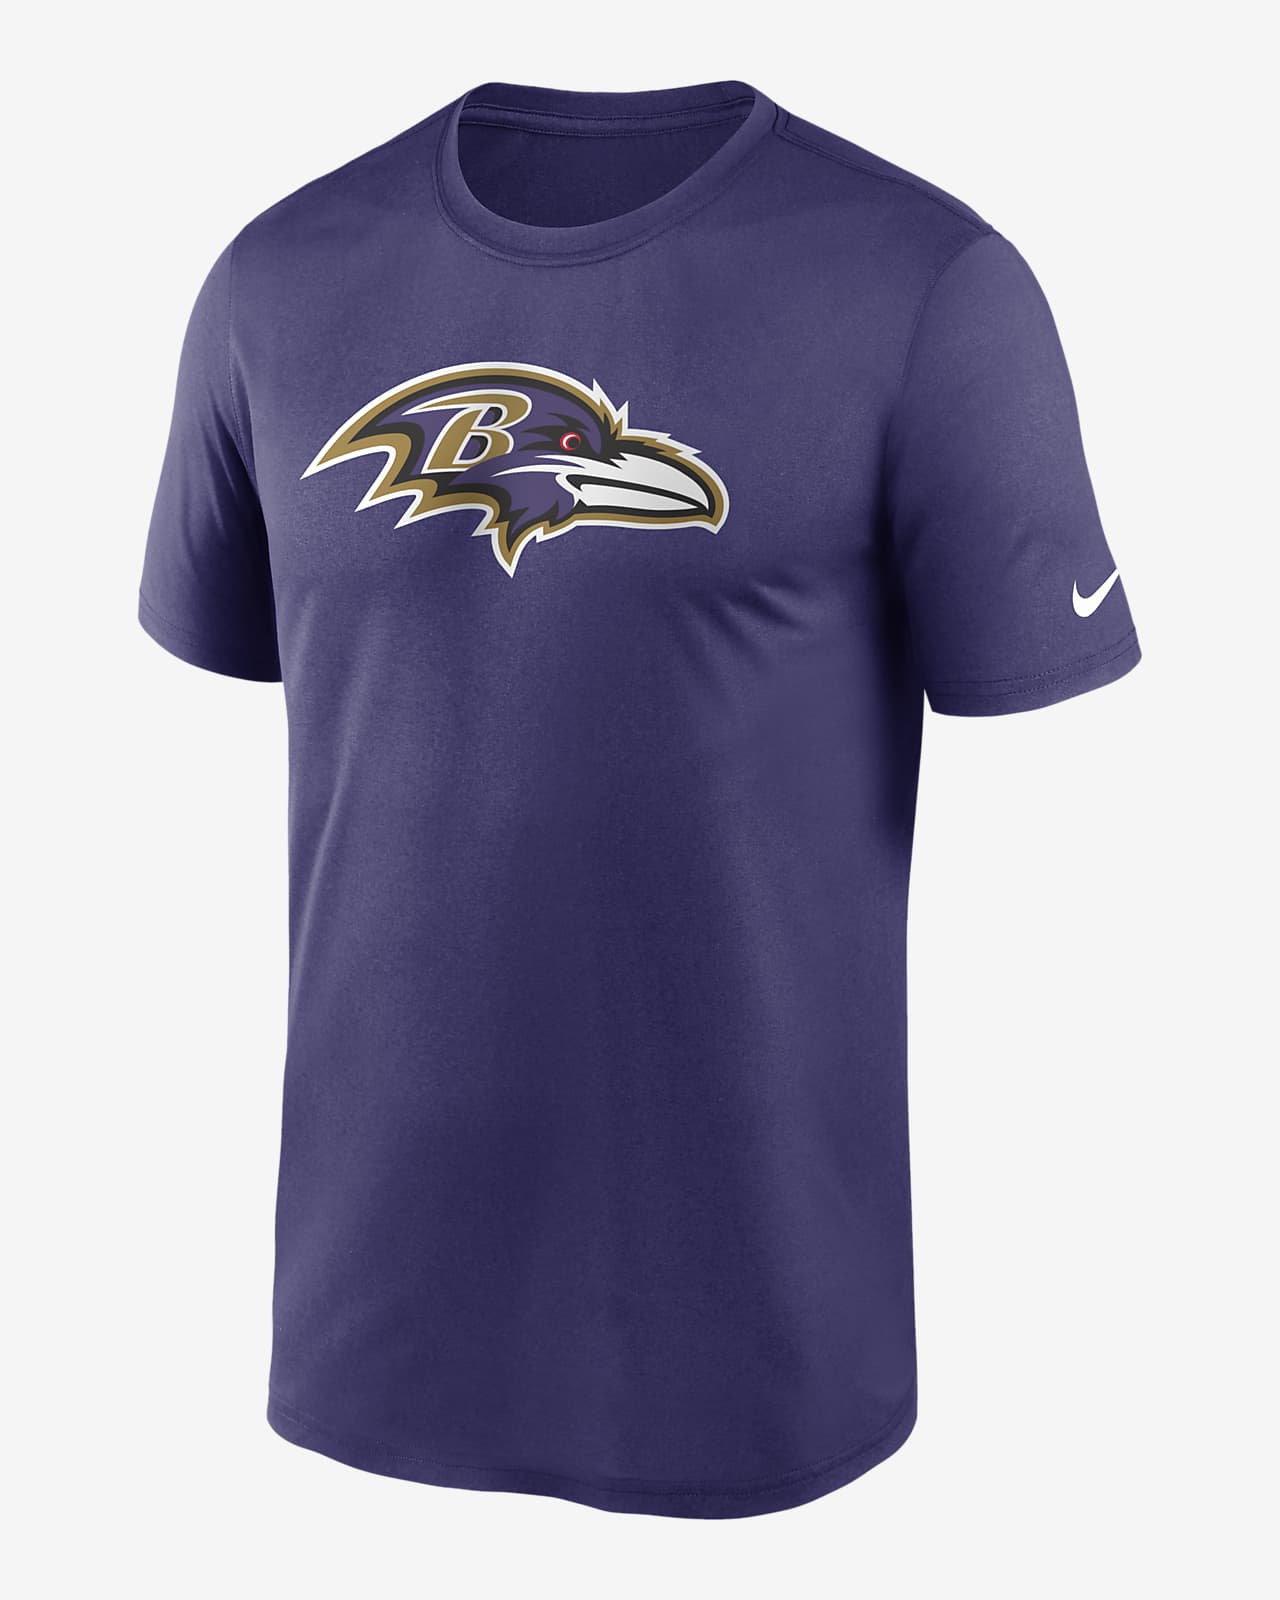 Playera para hombre Nike Dri-FIT Logo Legend (NFL Baltimore Ravens)